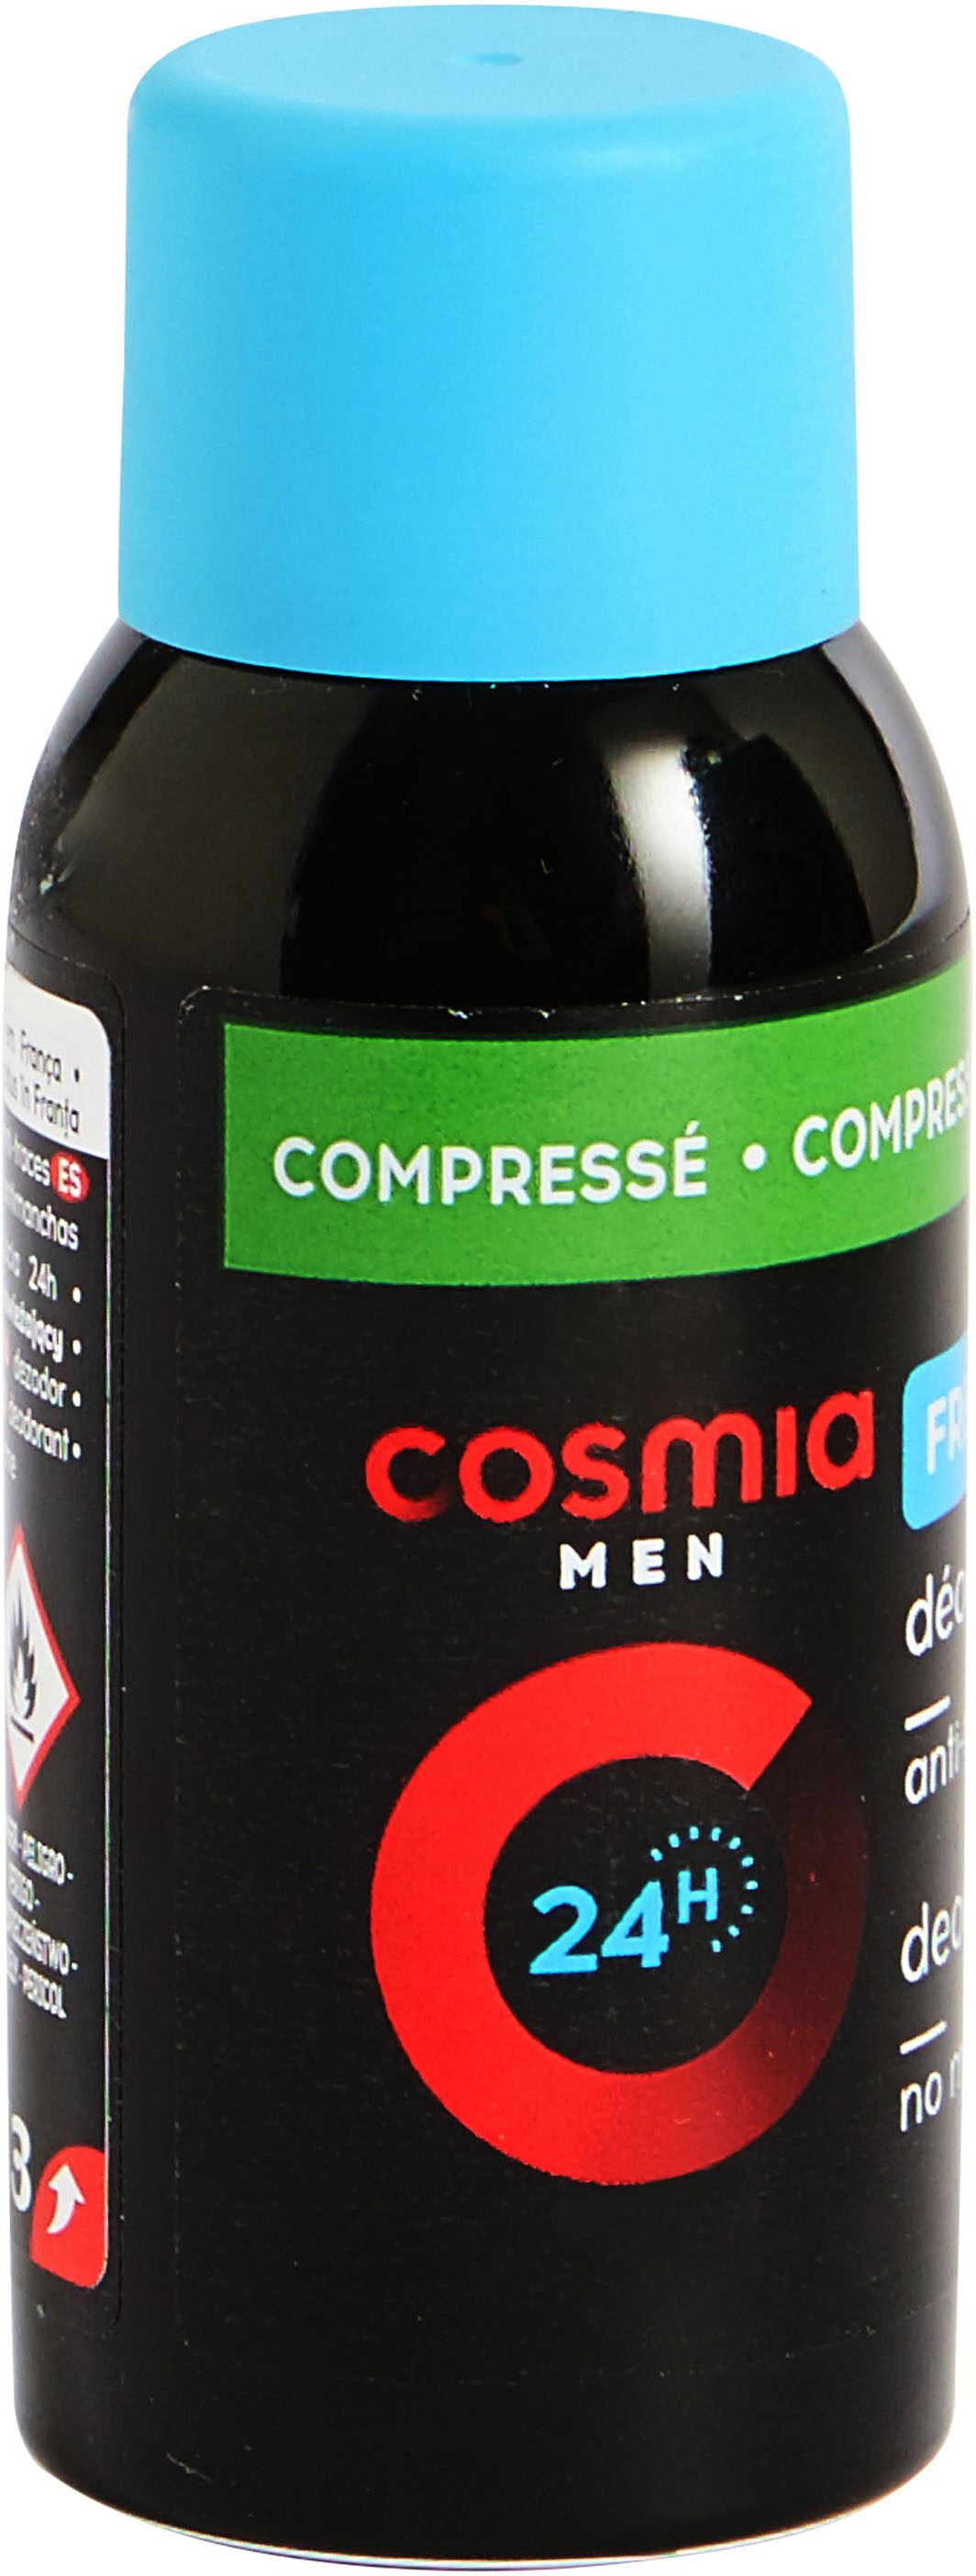 Cosmia deodorant homme atomiseur corps fraicheur 75 ml - Produit - fr